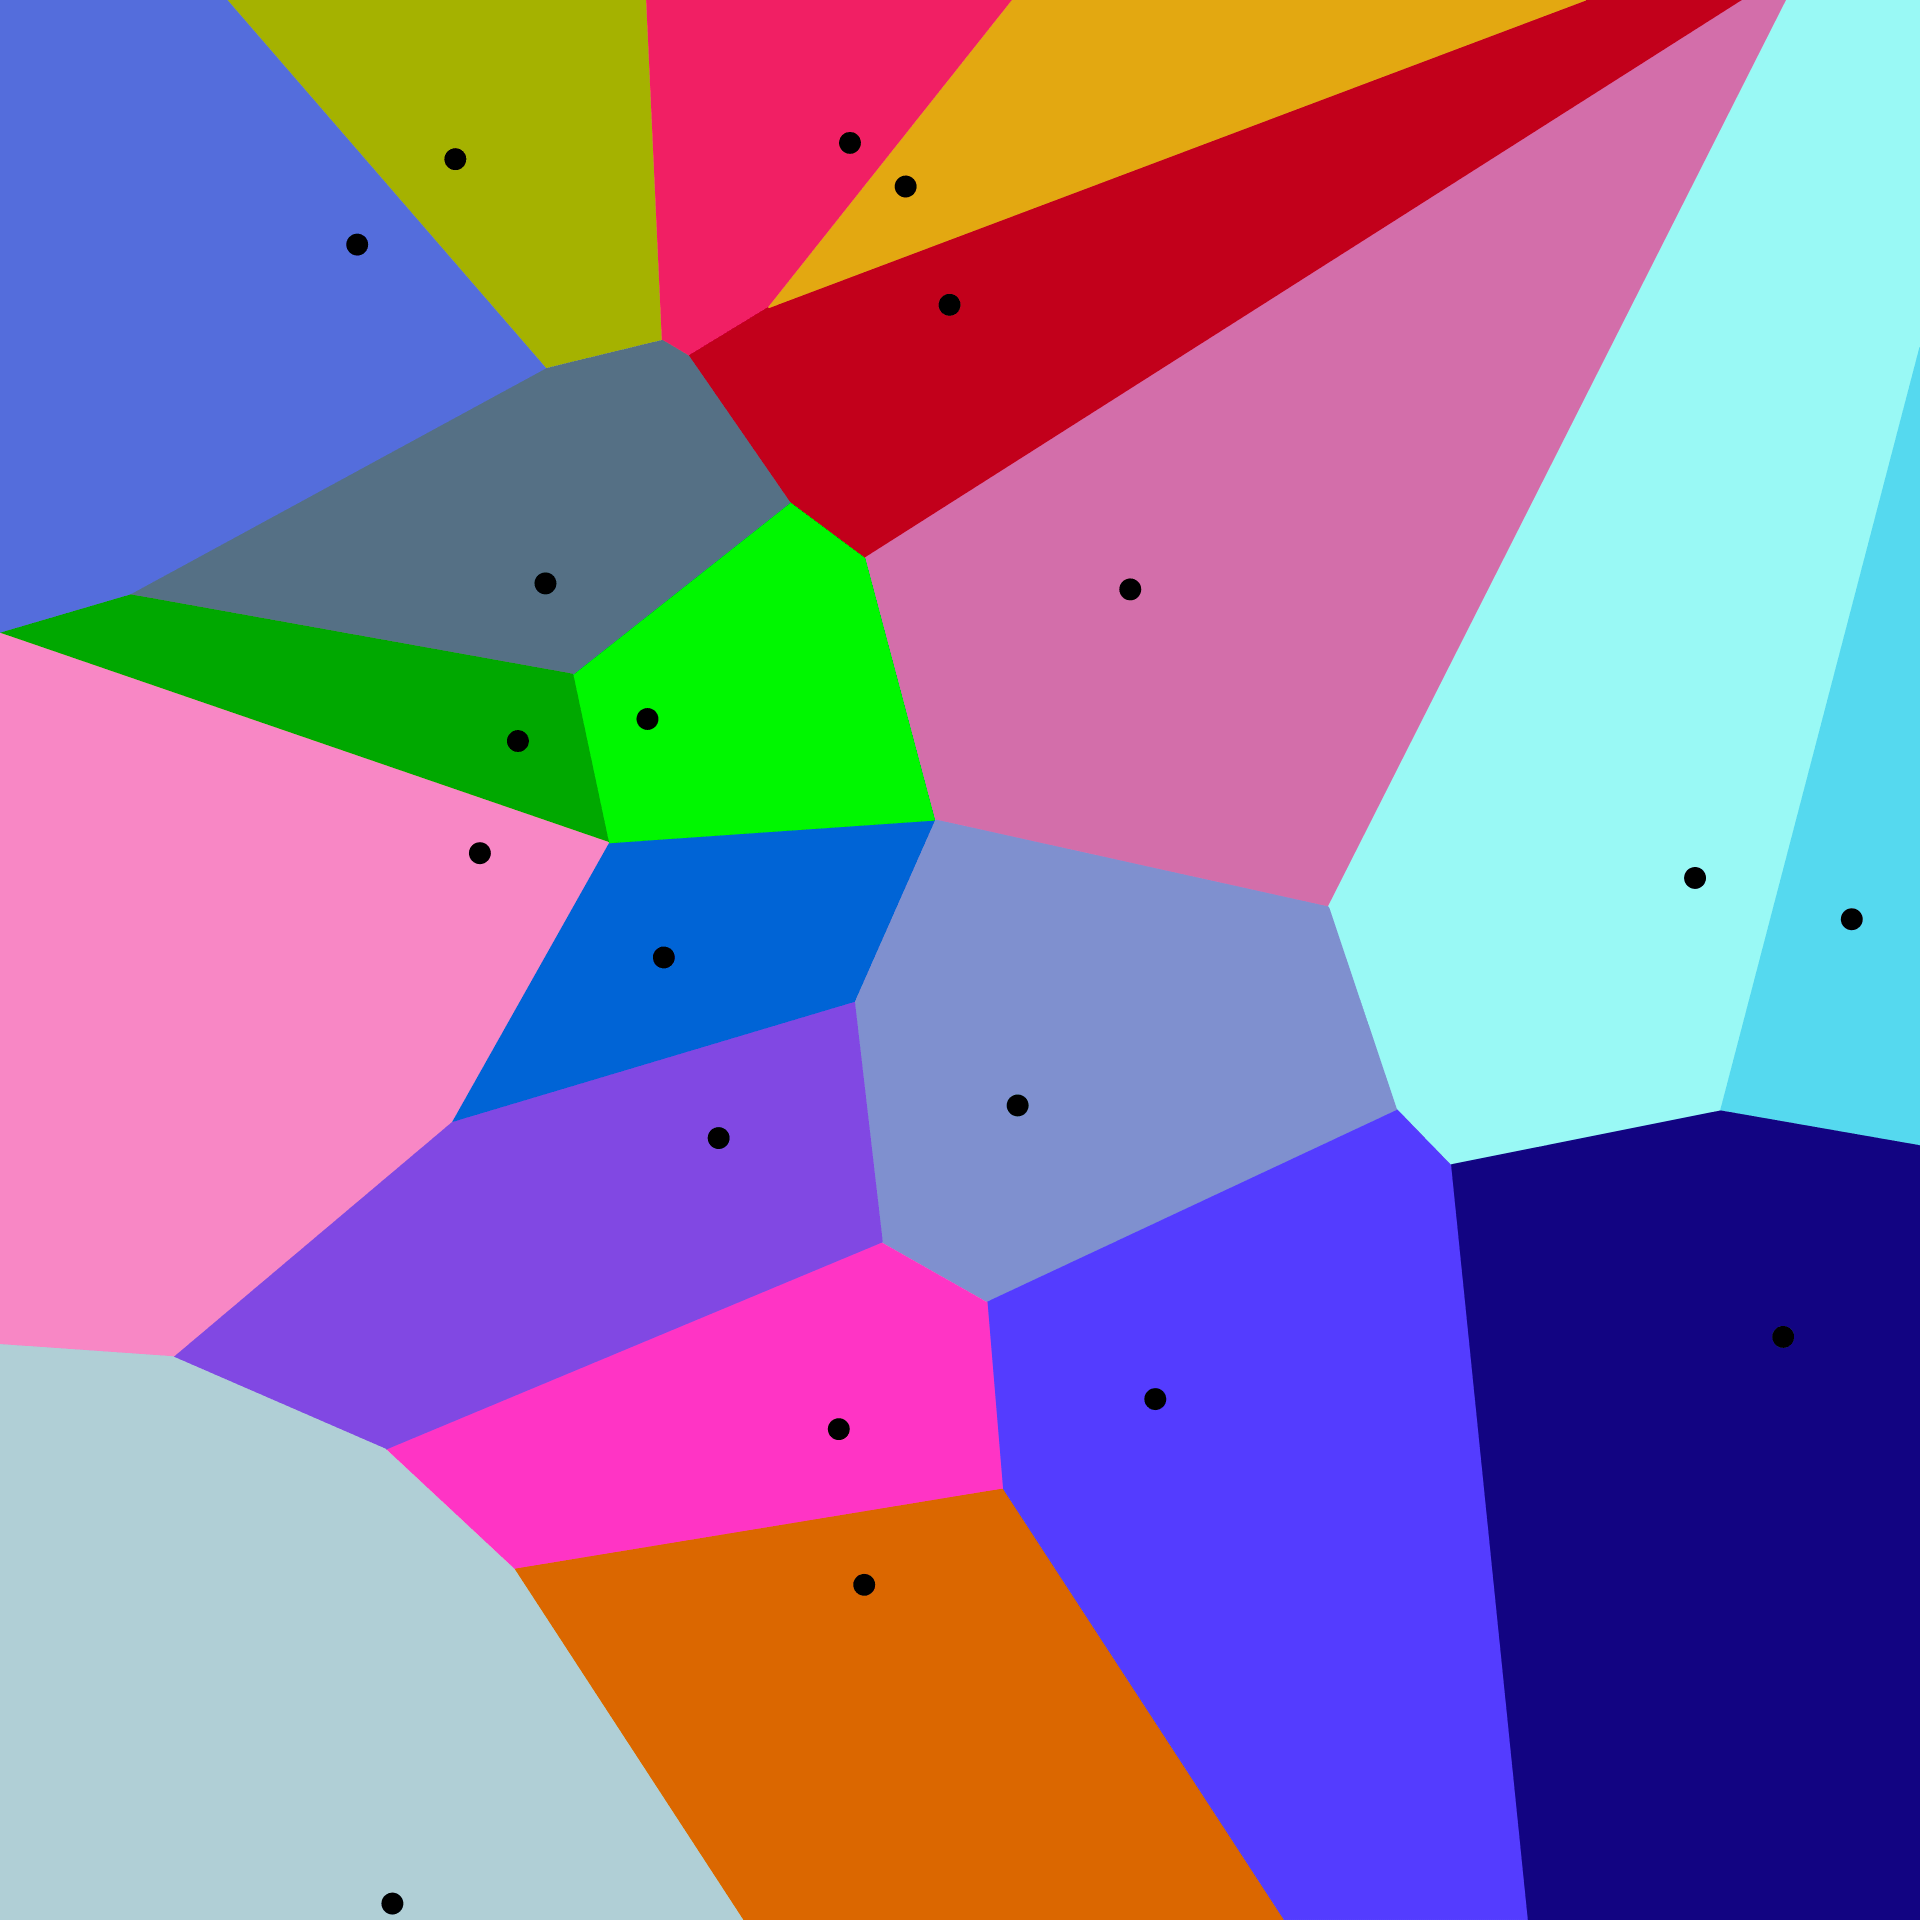 A two-dimensional Voronoi diagram. Image by Balu Ertl